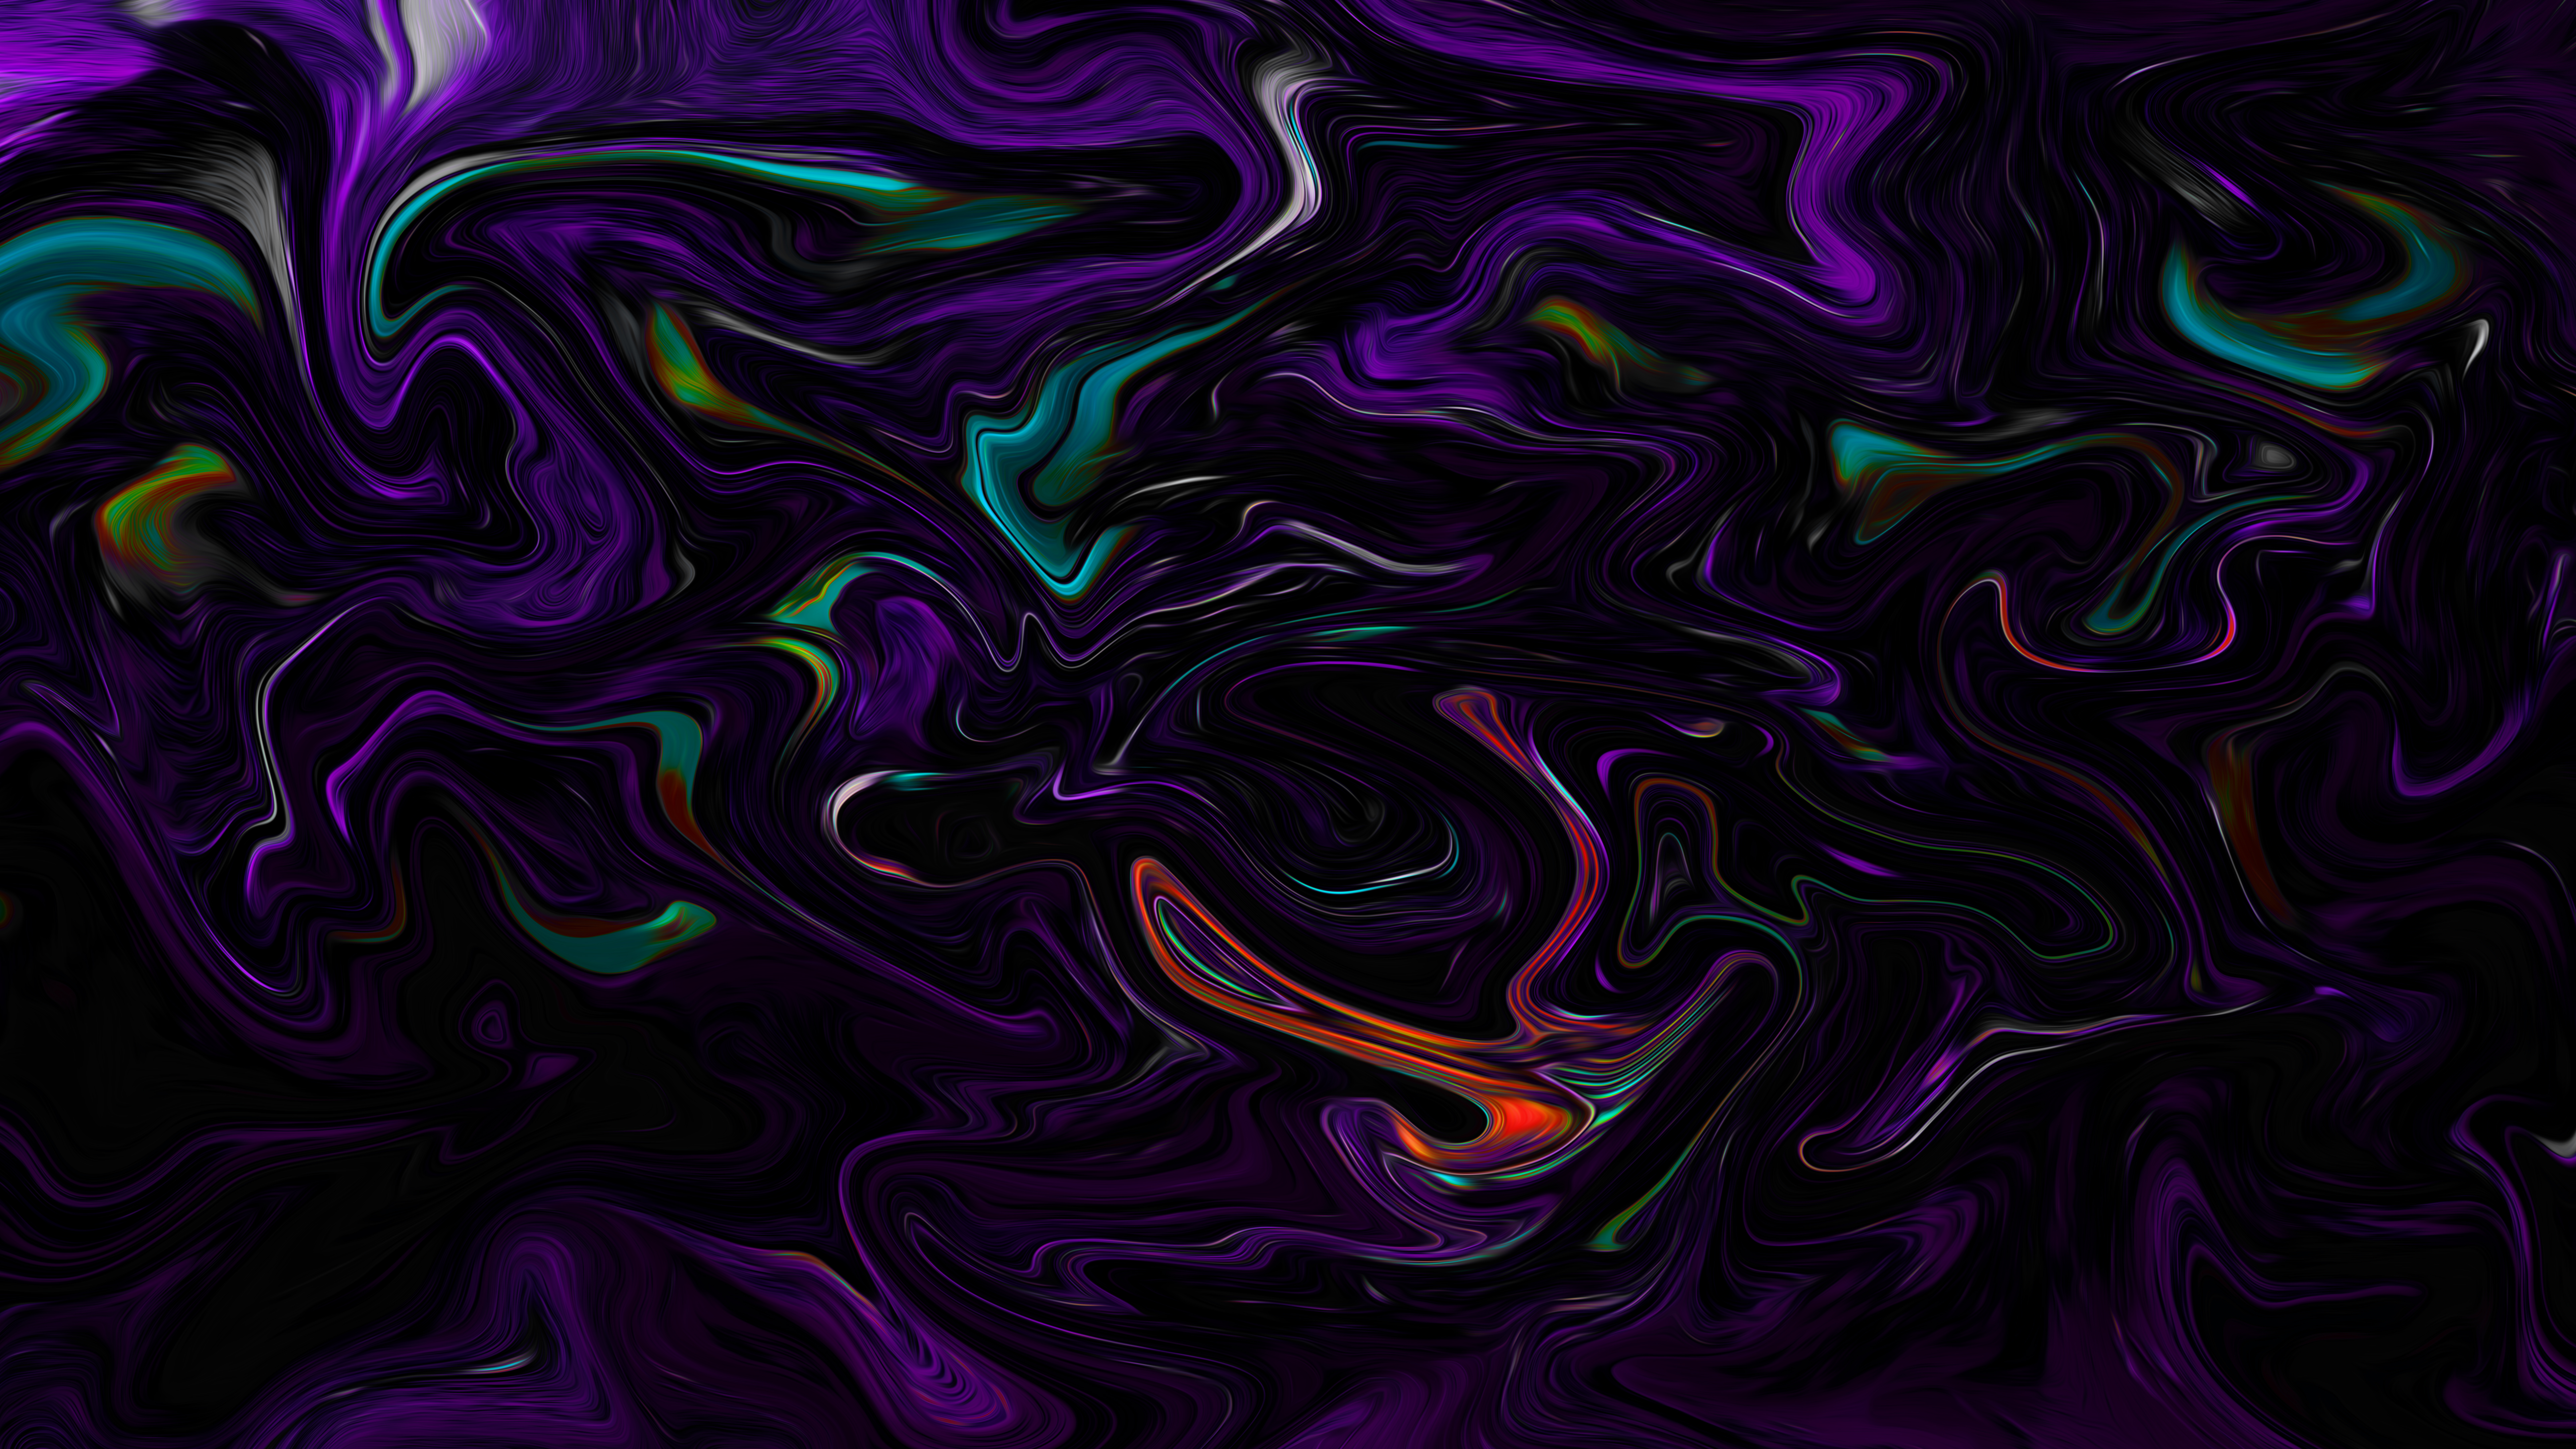 Abstract Fluid Liquid Colorful Artwork Digital Art Shapes Paint Brushes 8 K 7680x4320